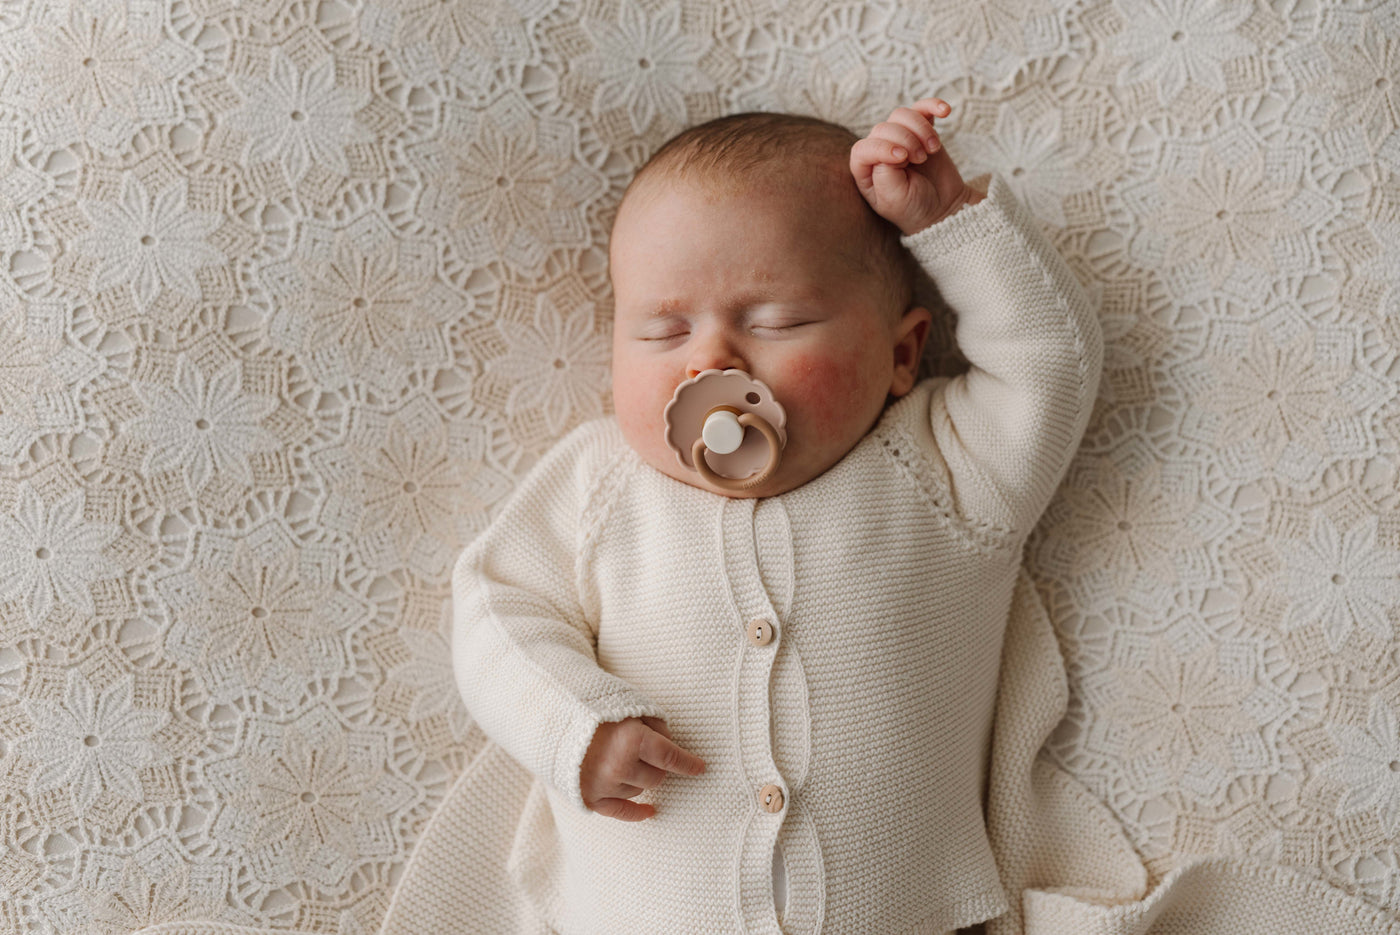 Ciucci FRIGG Daisy Latex - Baby Accessories - Baby Rainbow Shop - P.IVA 04847500230